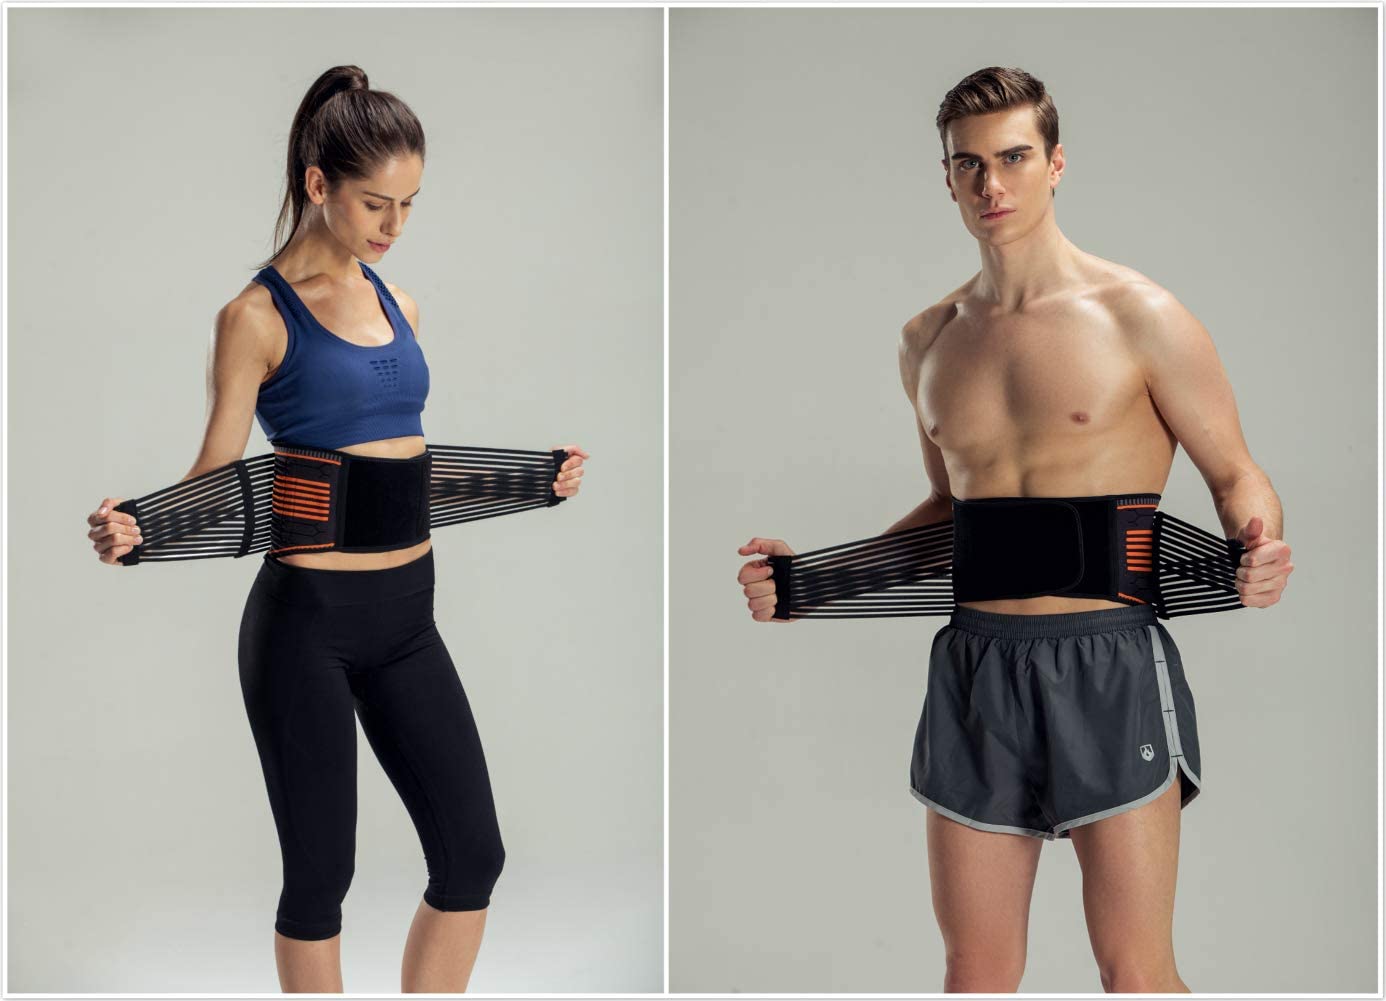 Loovit Back Brace Posture Corrector - Back Support Belt with Fully  Adjustable Straps Relief Lower & Upper Back Pain, Improve Posture &  Provides Lumbar